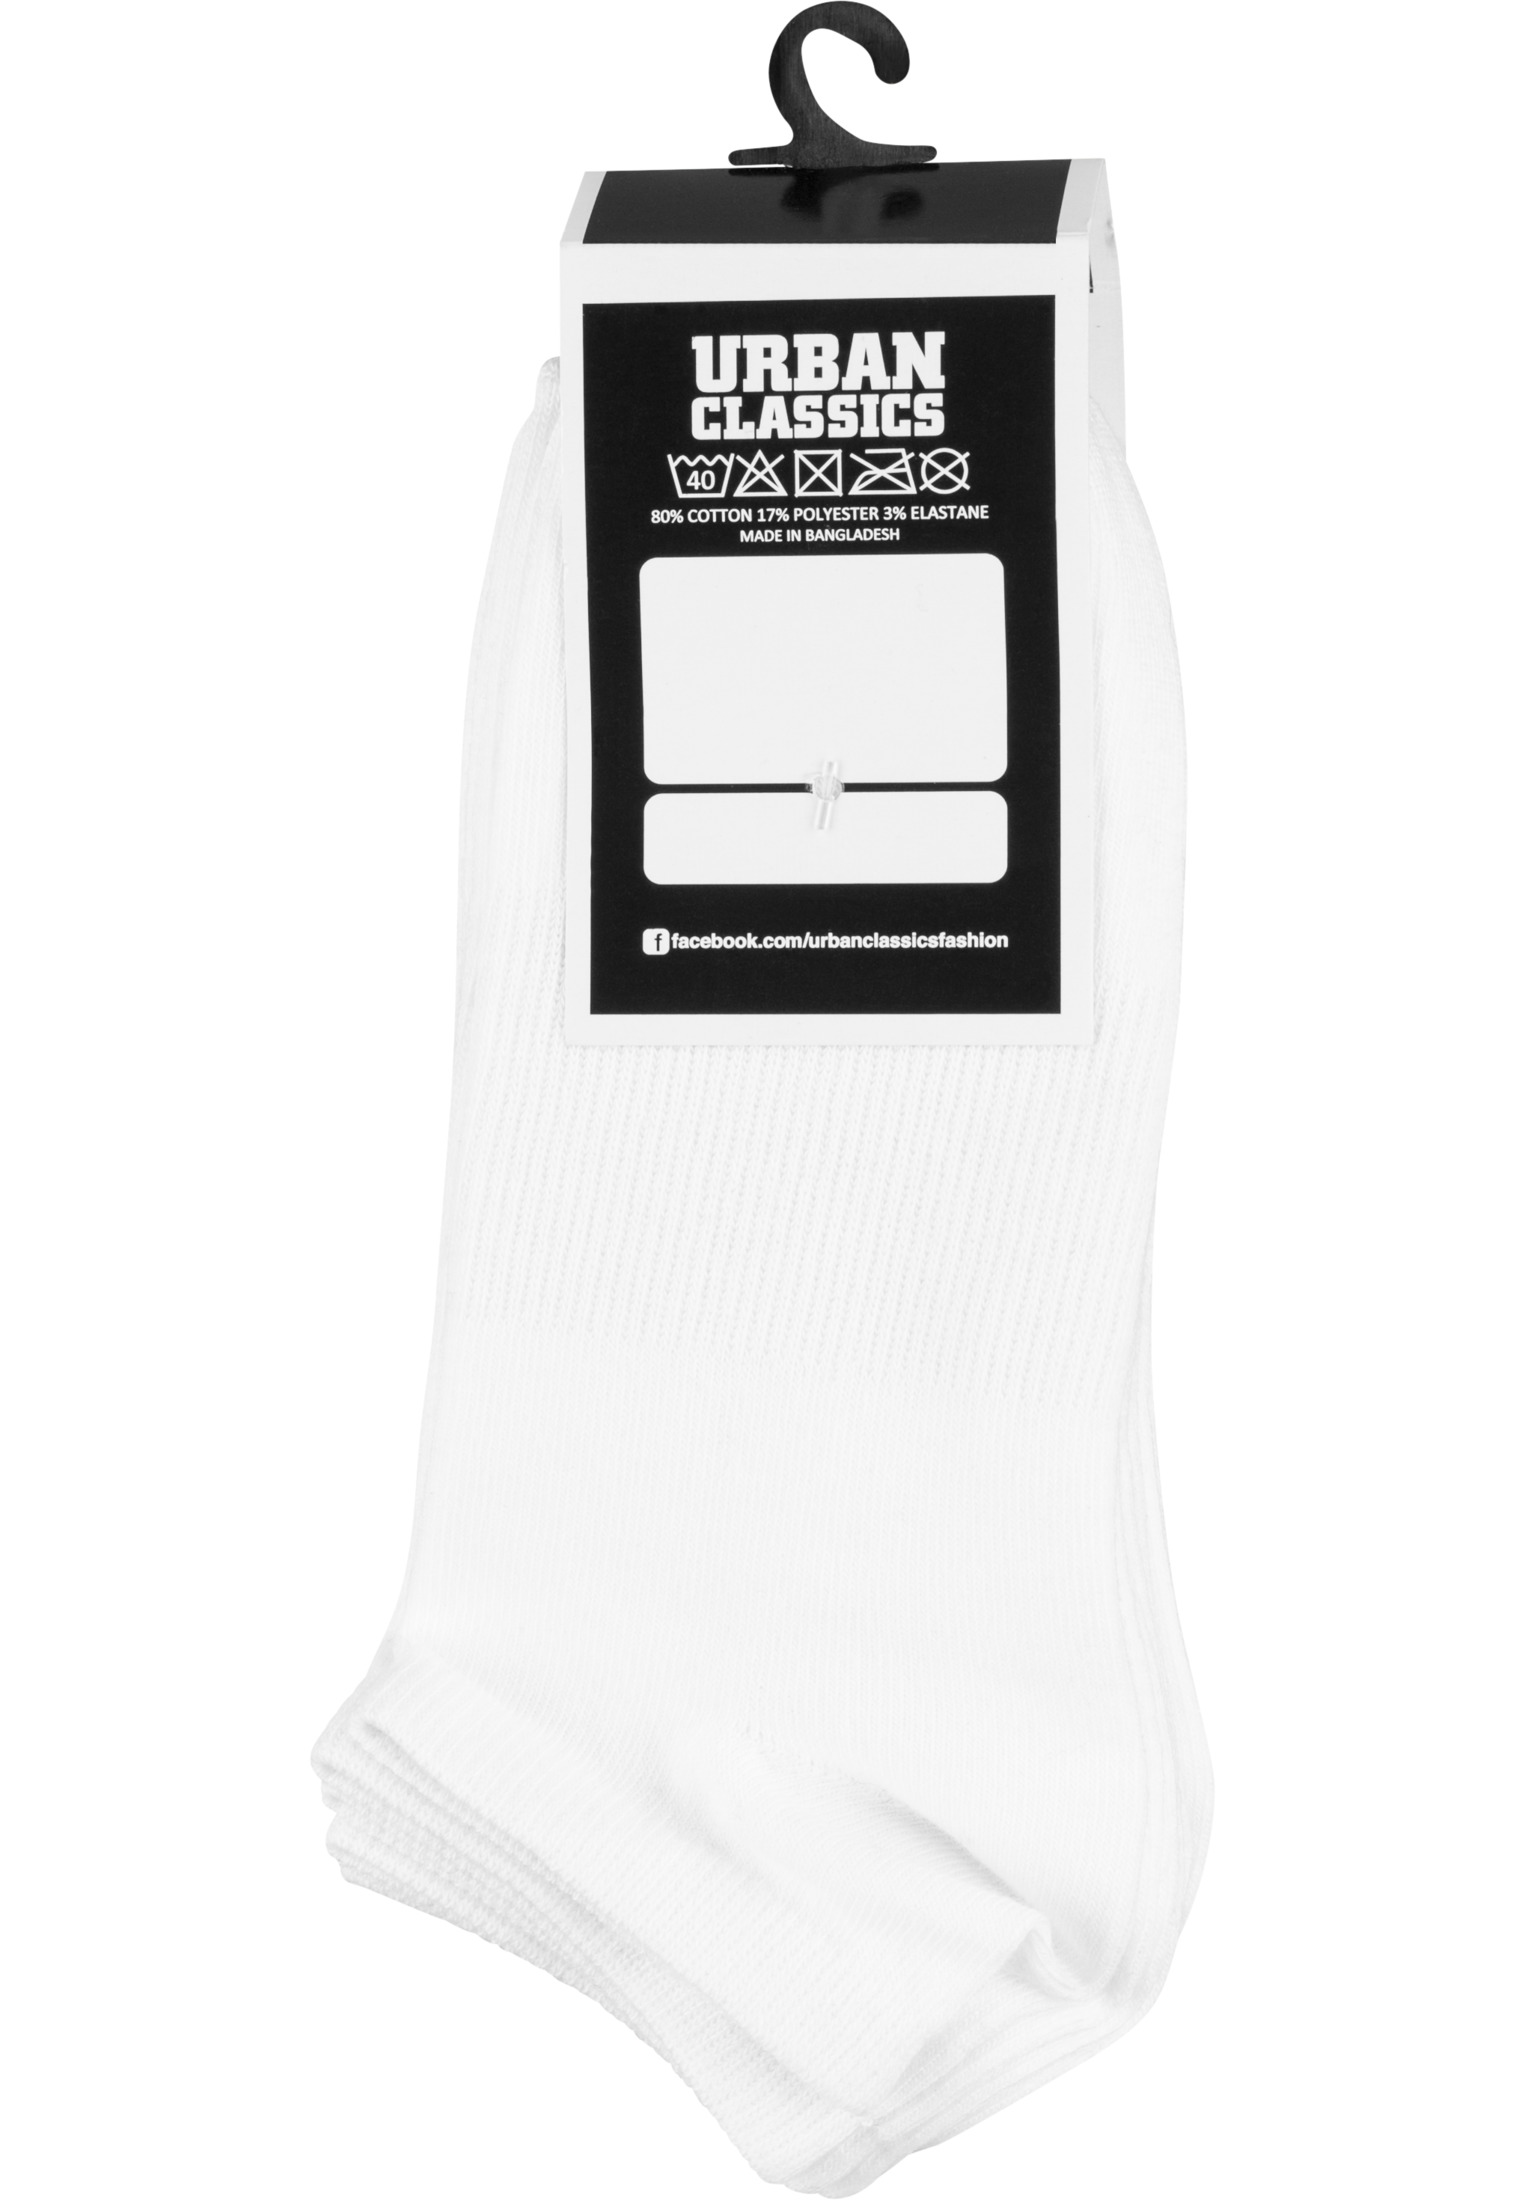 Socken No Show Socks 5-Pack in Farbe white